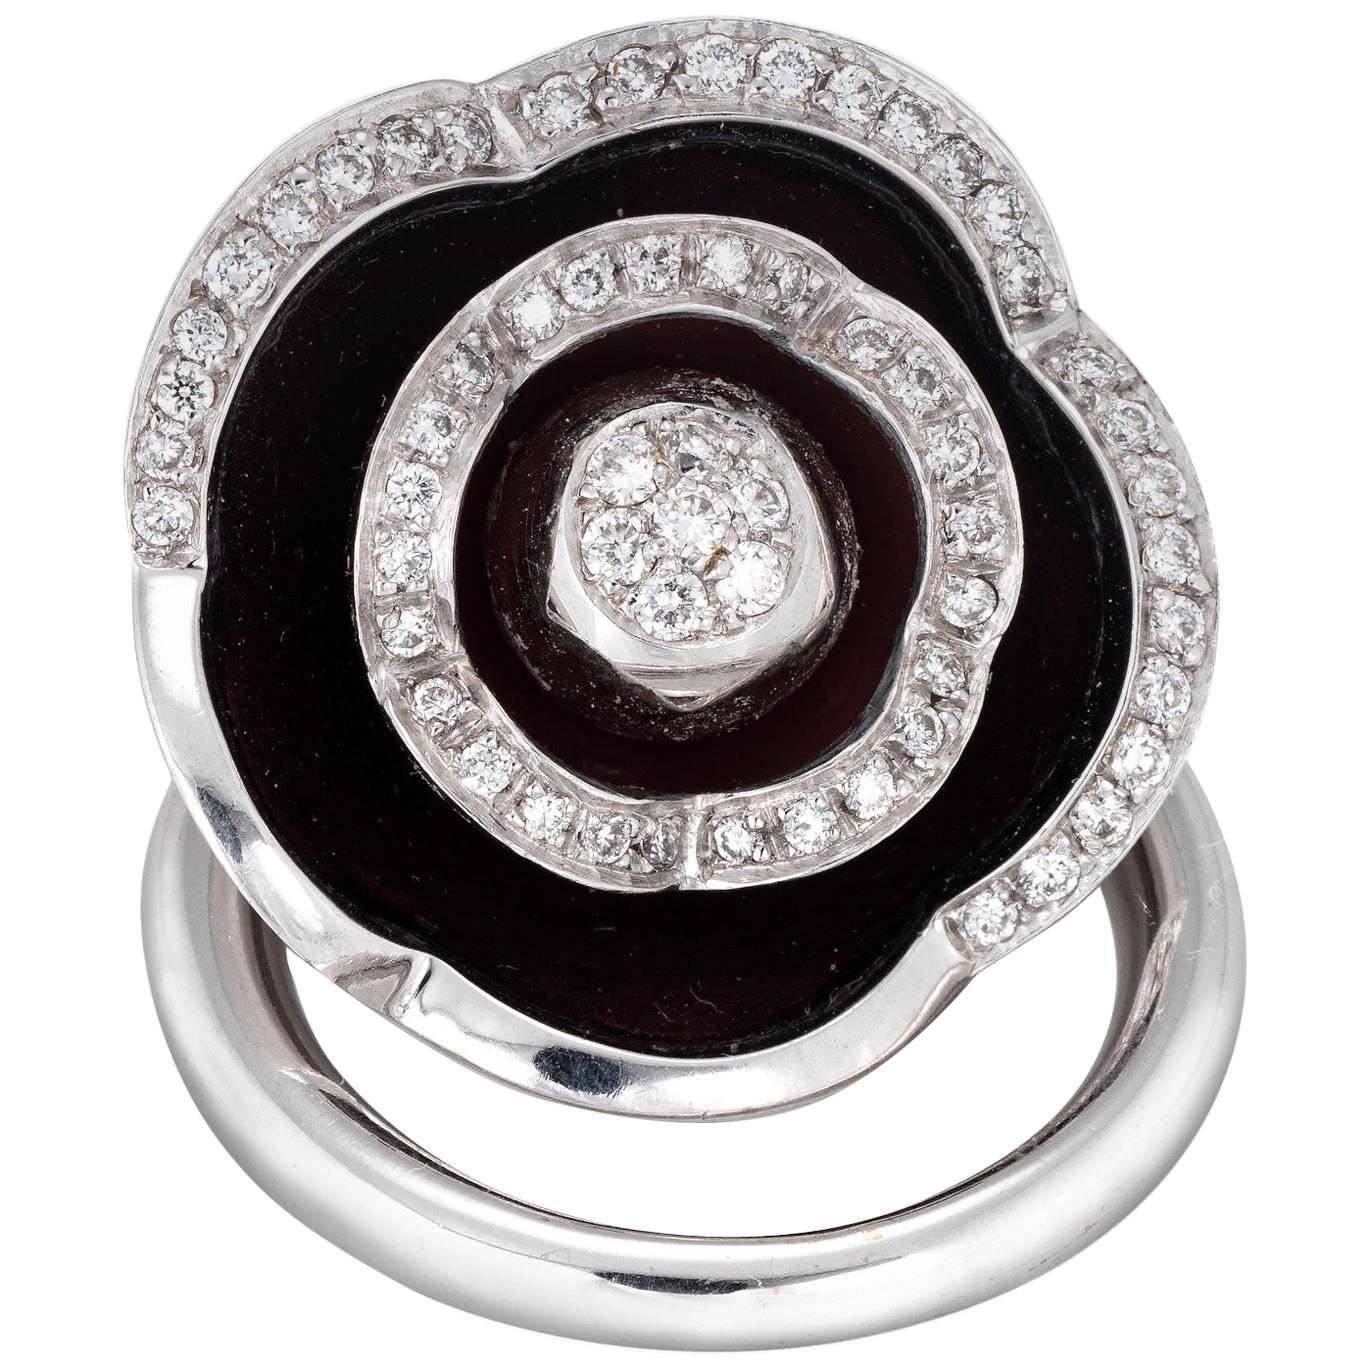 Movable Flower Diamond Ring Enamel Vintage Cocktail 18 Karat White Gold Jewelry